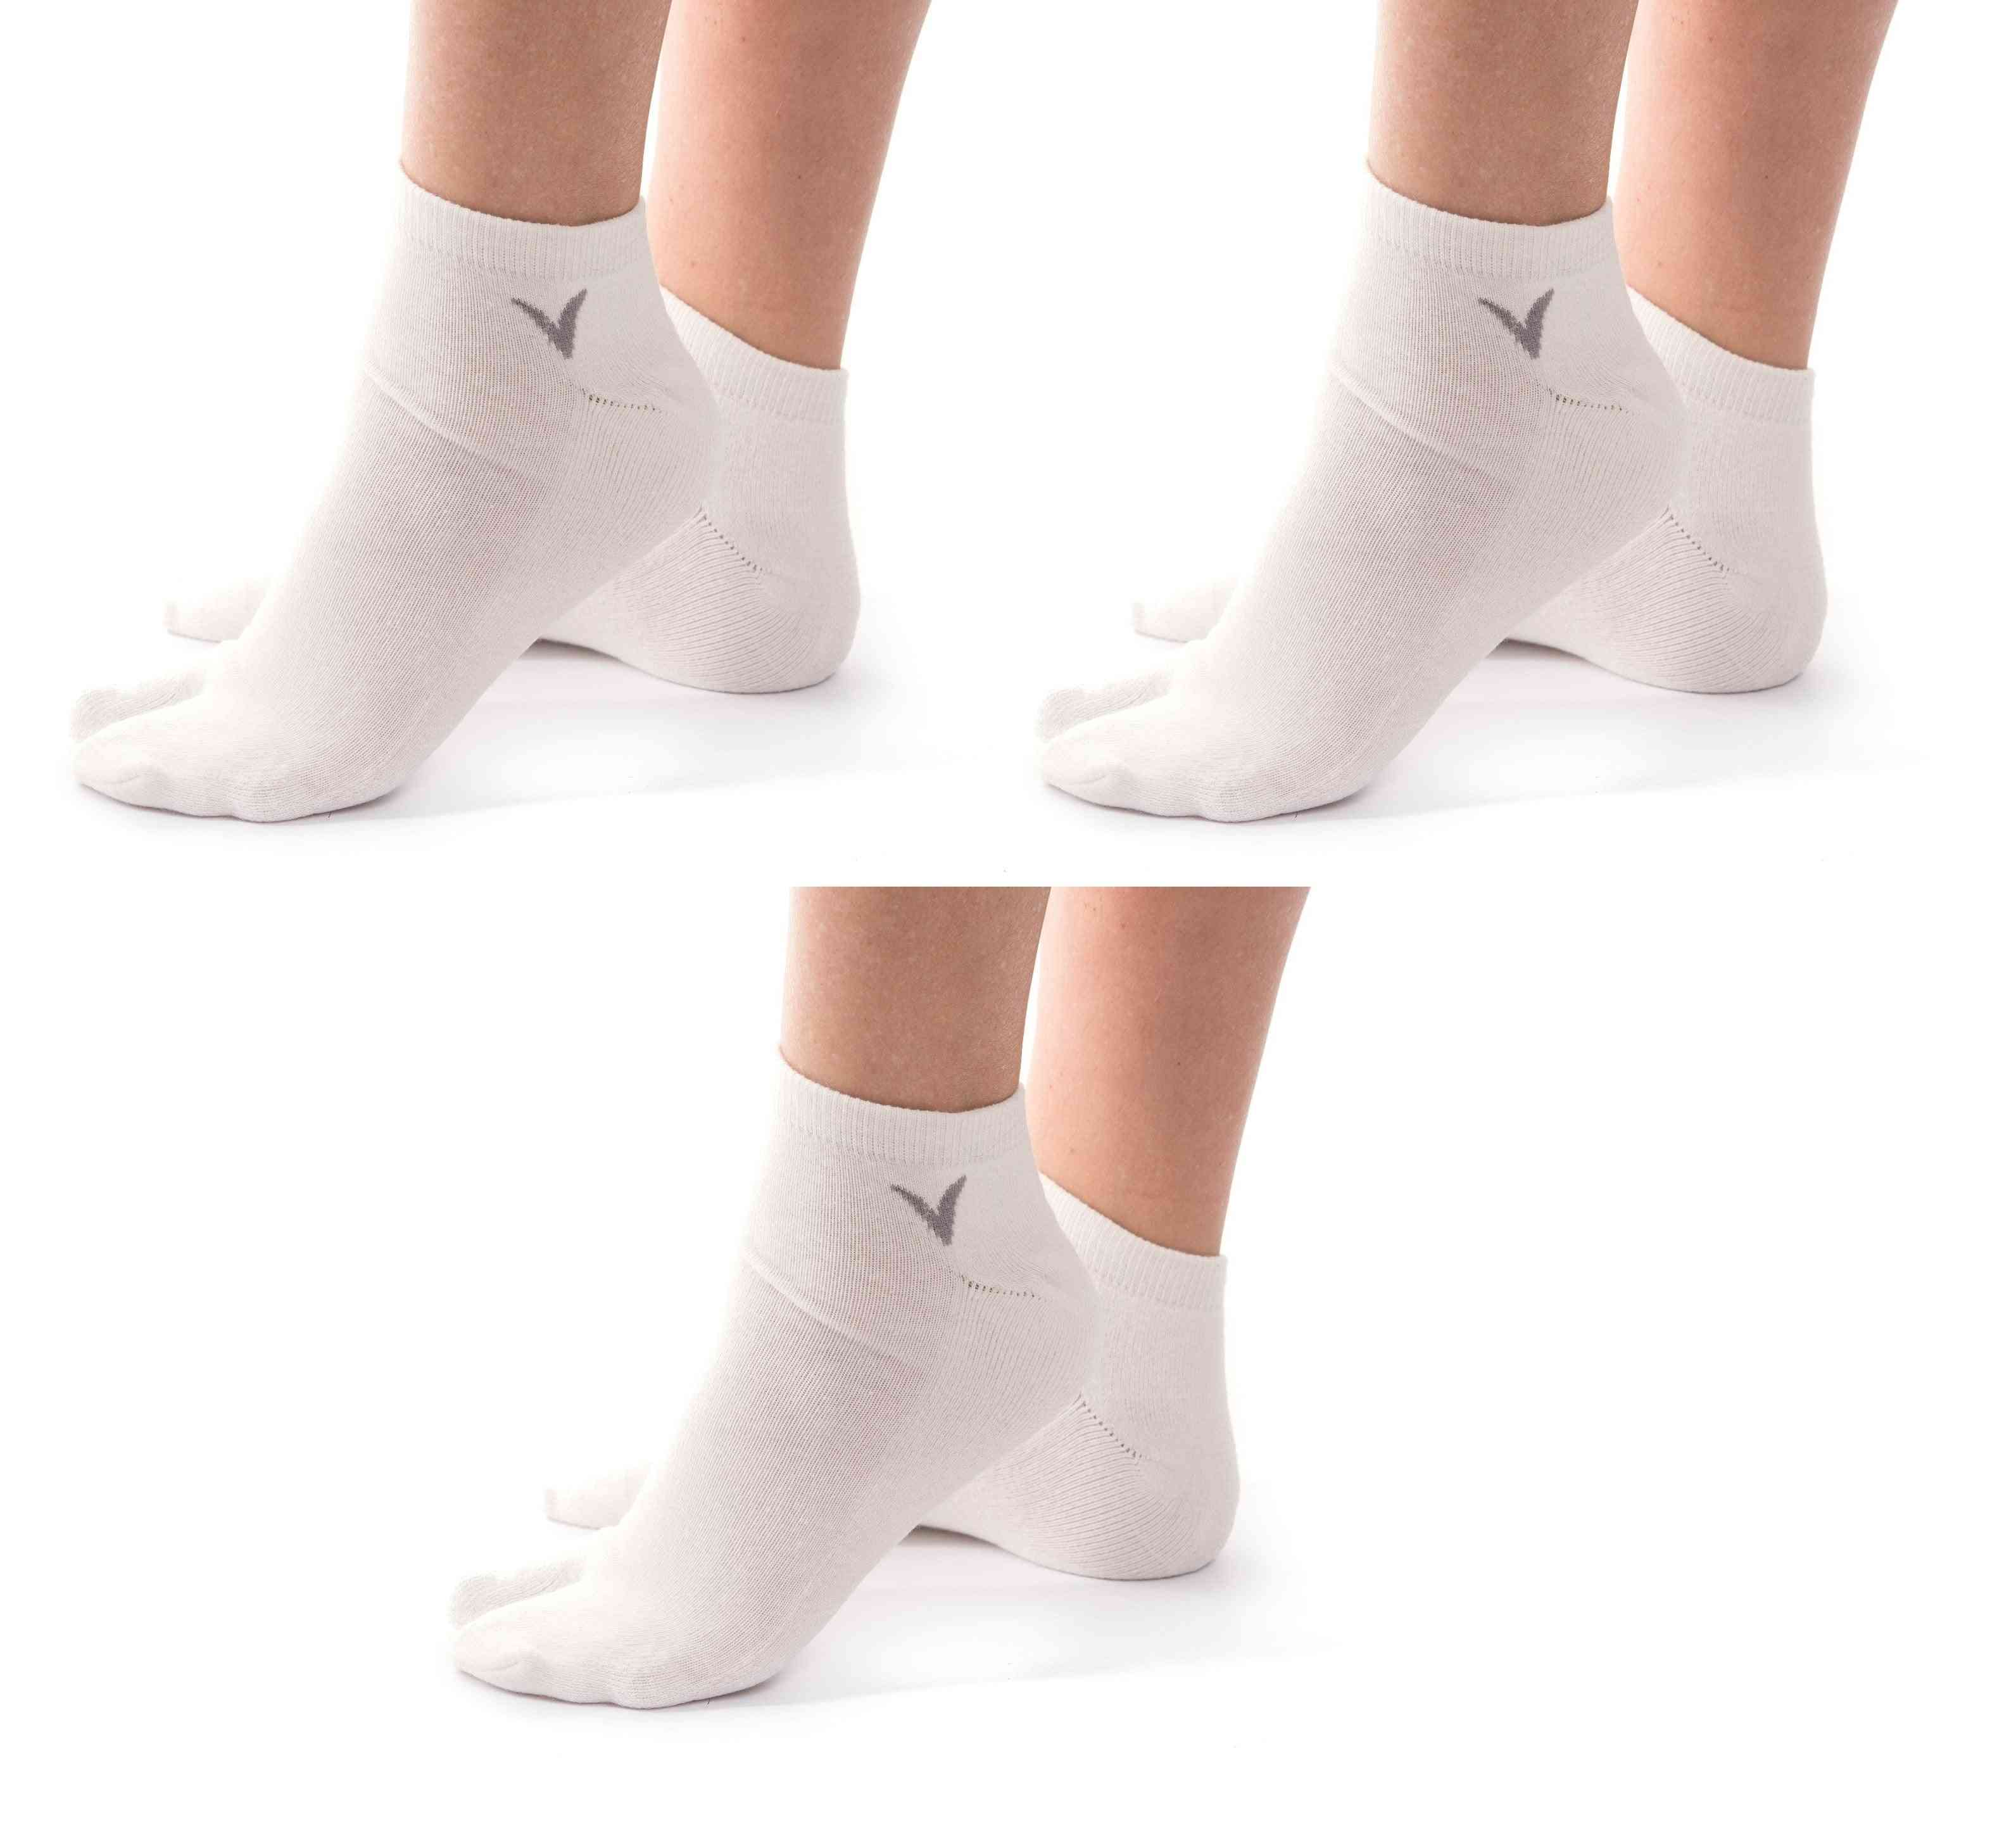 Flip-flop Ankle Socks And Women